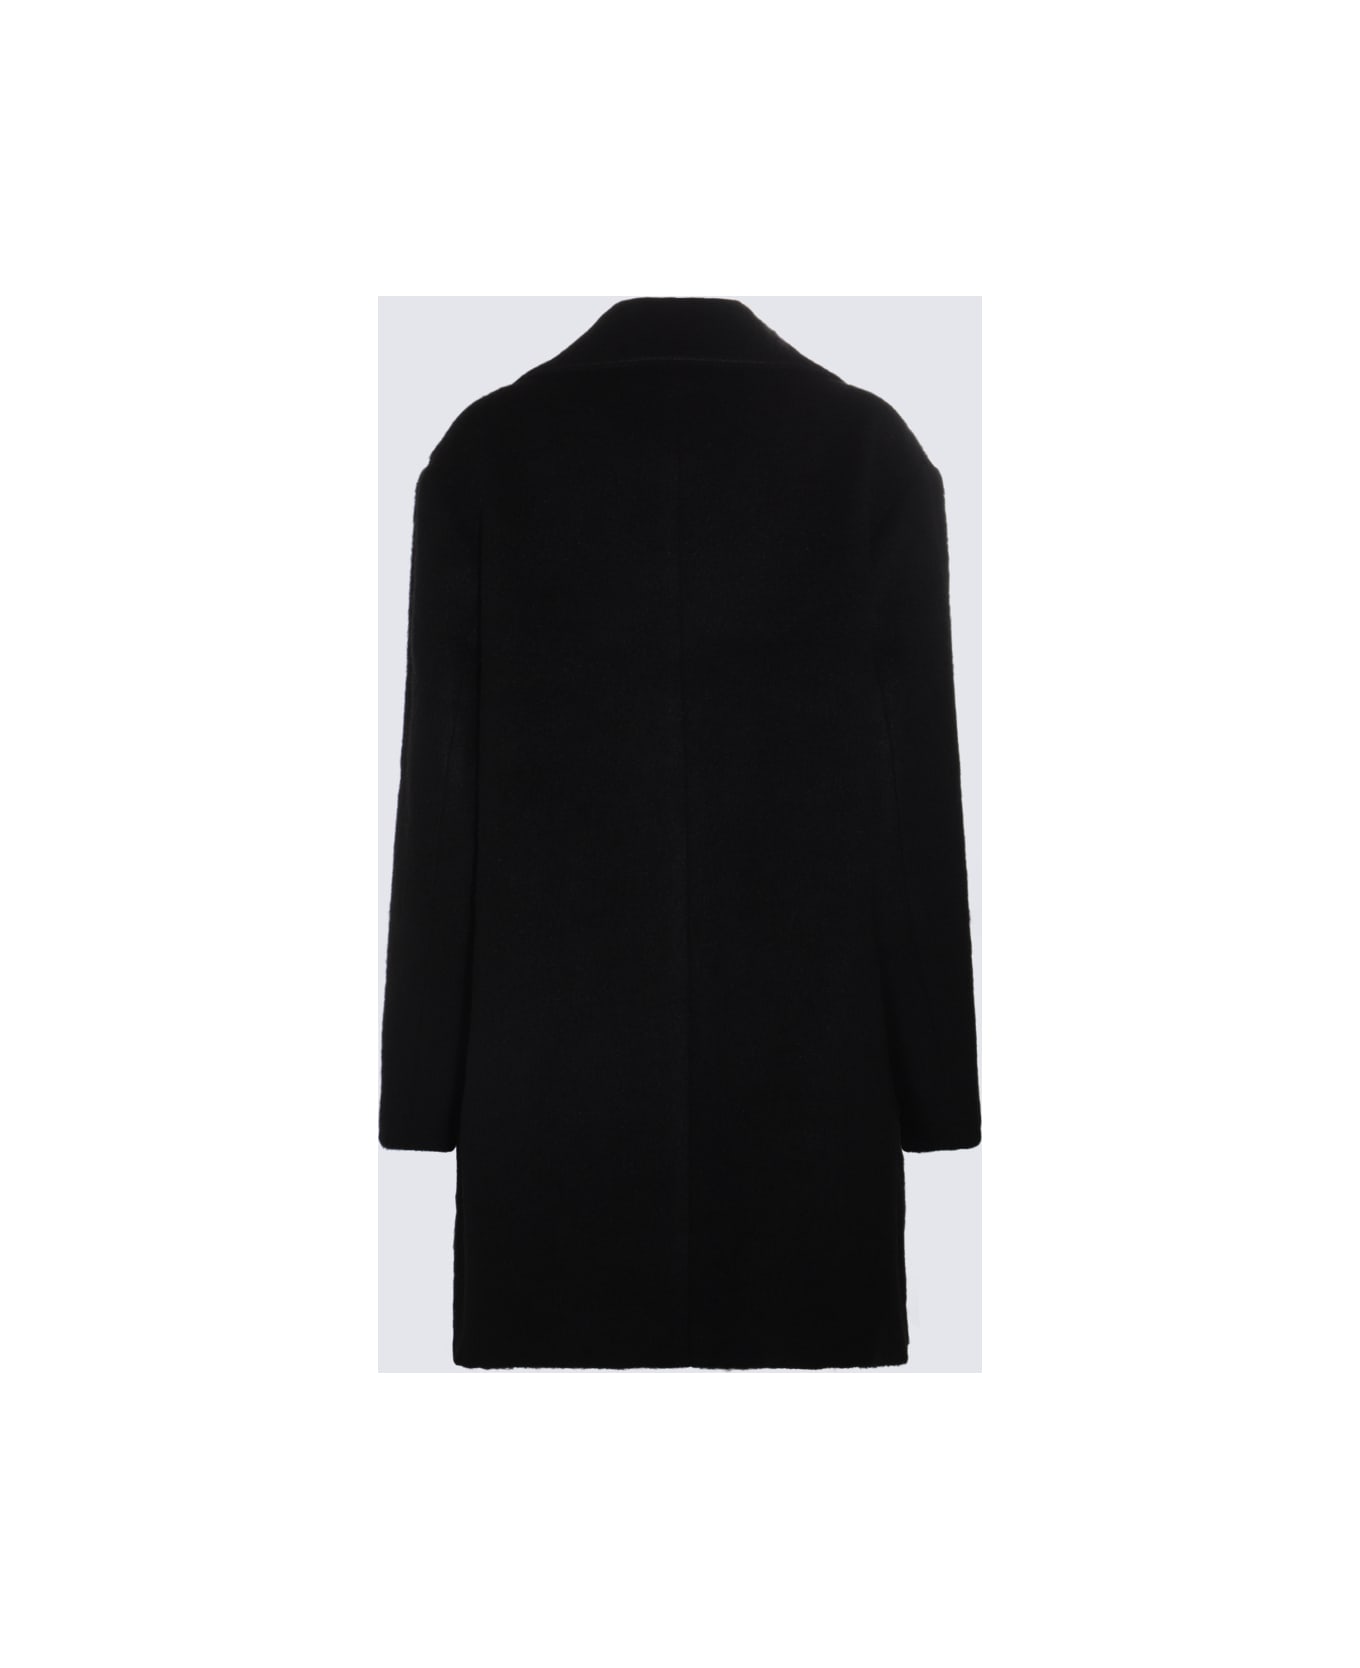 Jil Sander Black Wool And Mohair Blend Coat - Black コート